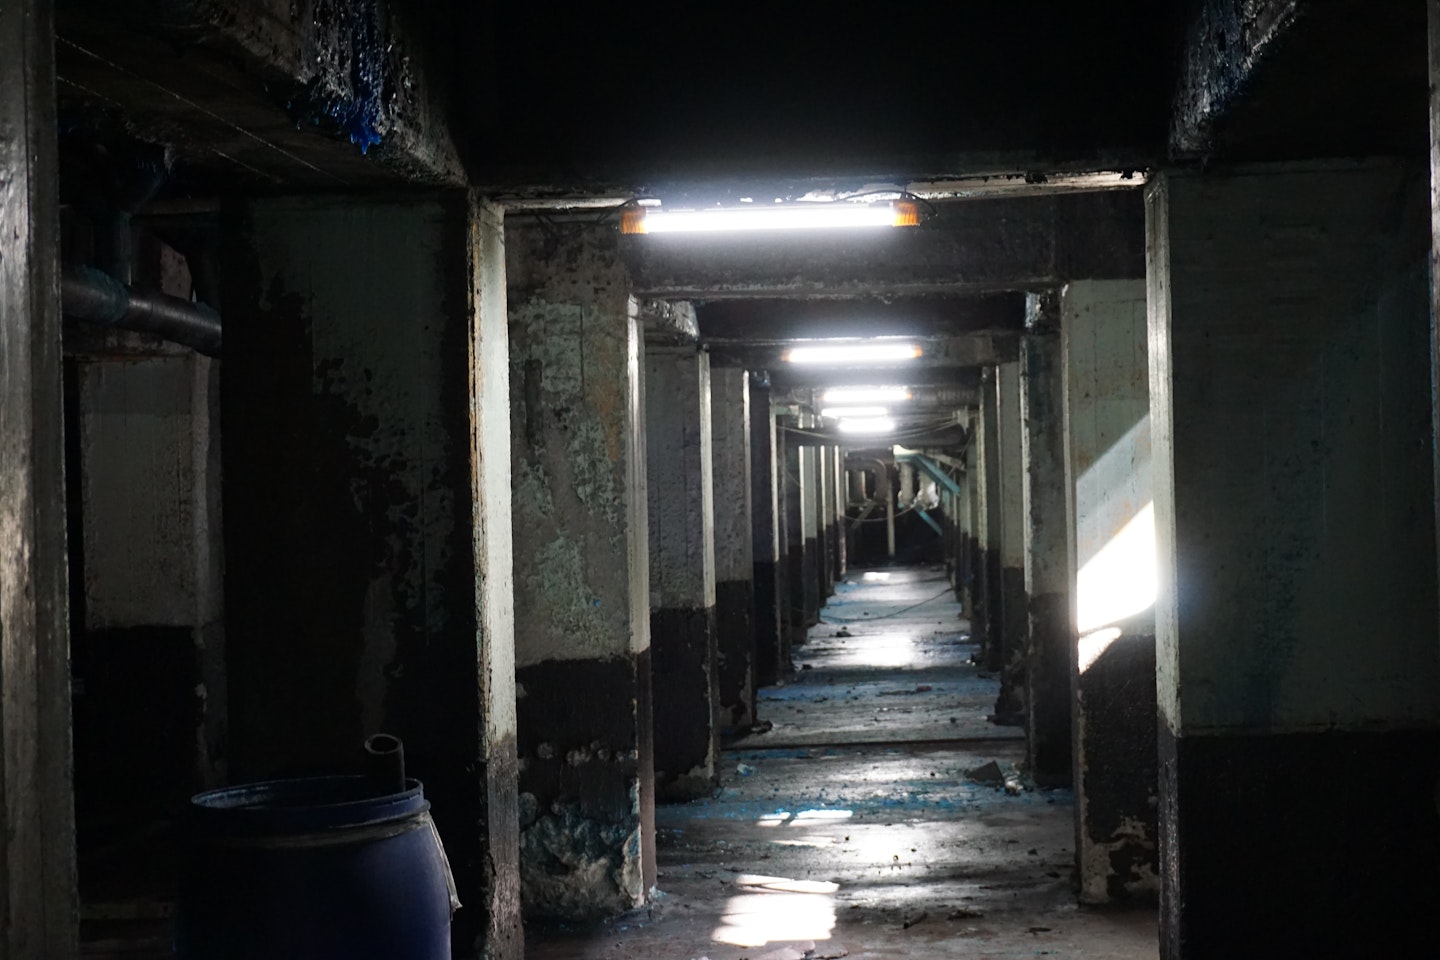 AC2 Mining Lead Light in application, installed in an underground mine long dark corridor